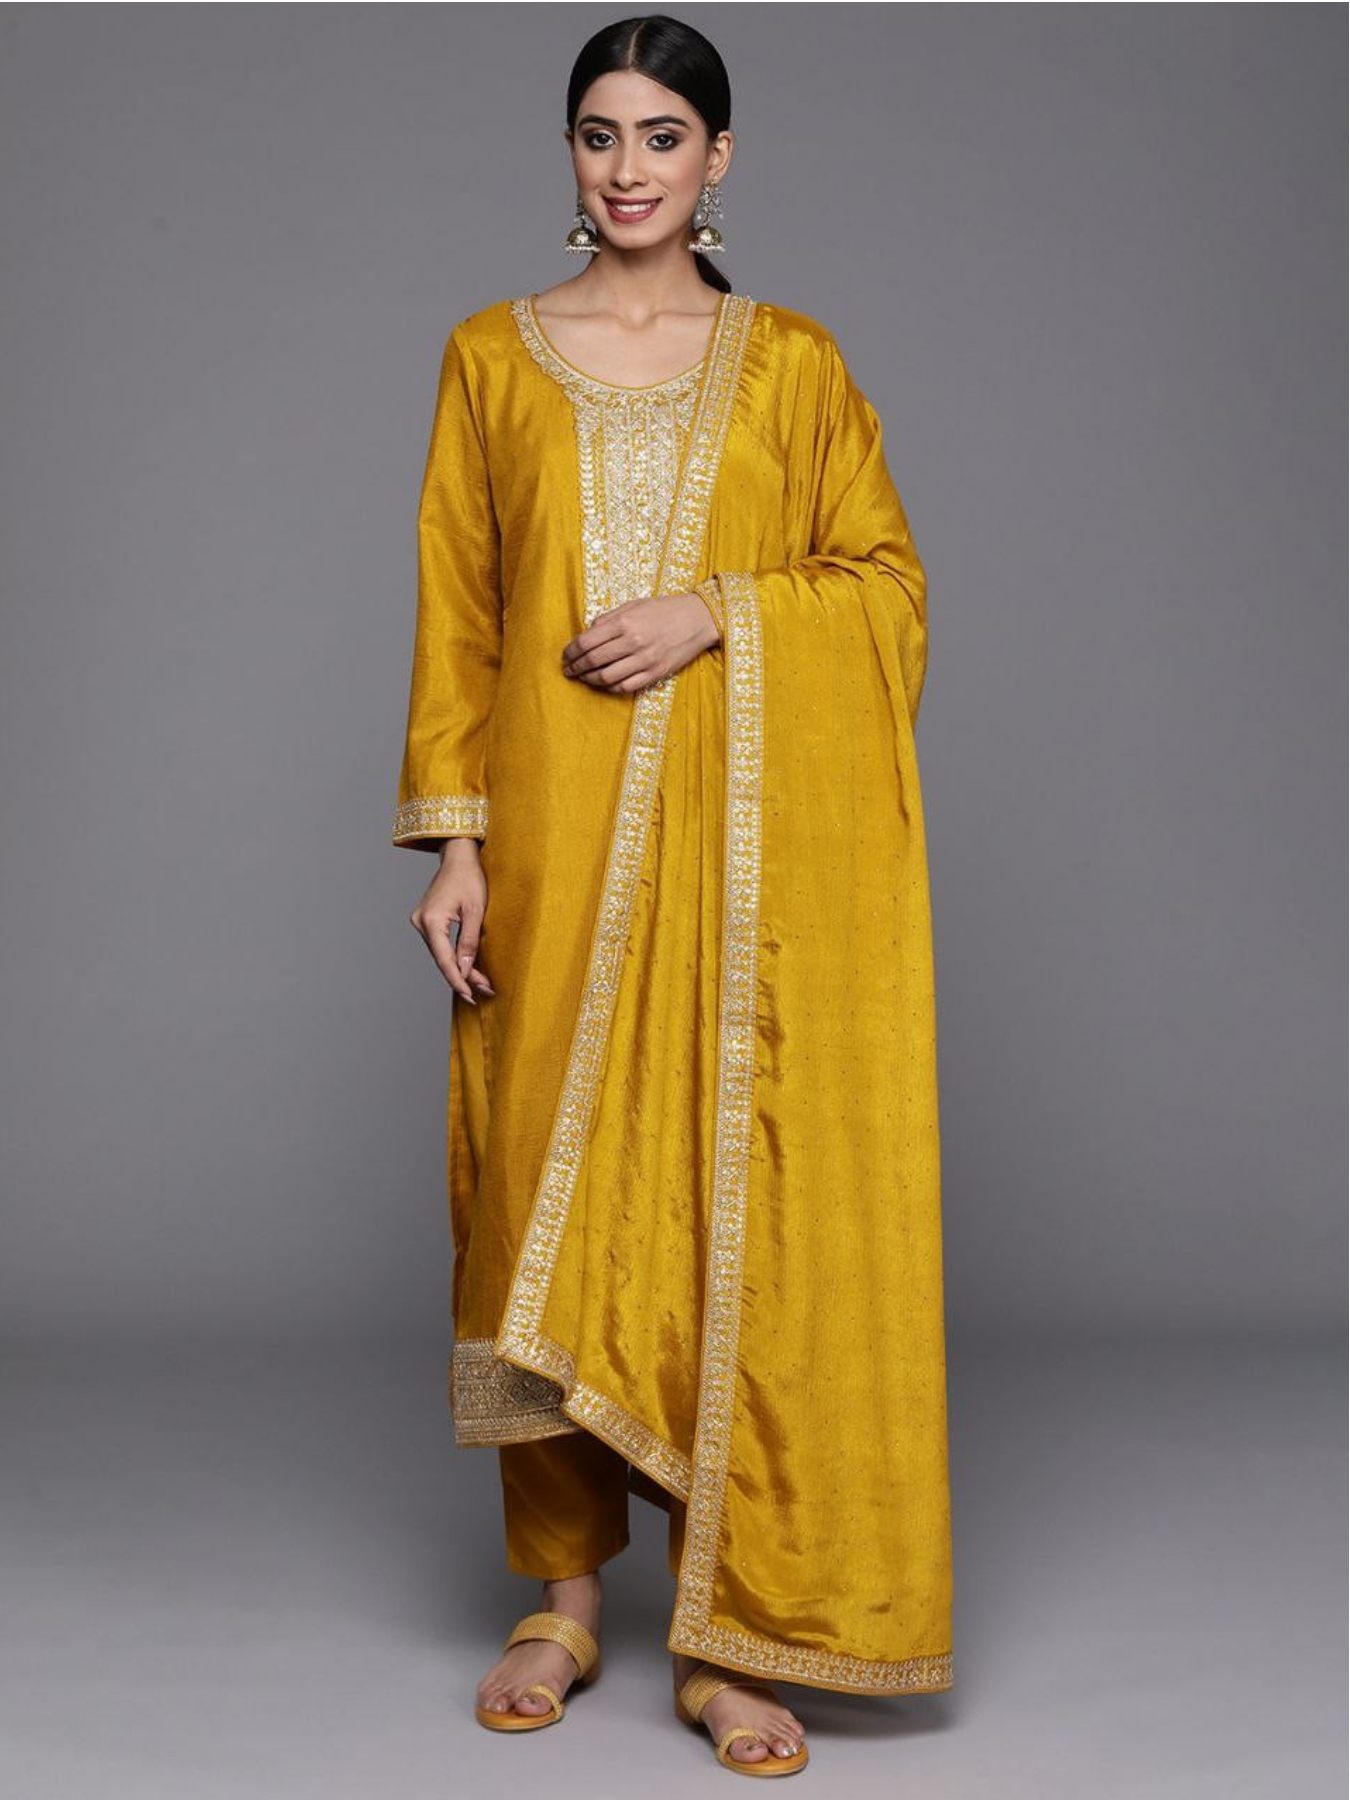 Golden Pants को kurtis के साथ कैसे Style करें । How To Style Golden Pant  With Kurtis | Rohini Hamkar - YouTube